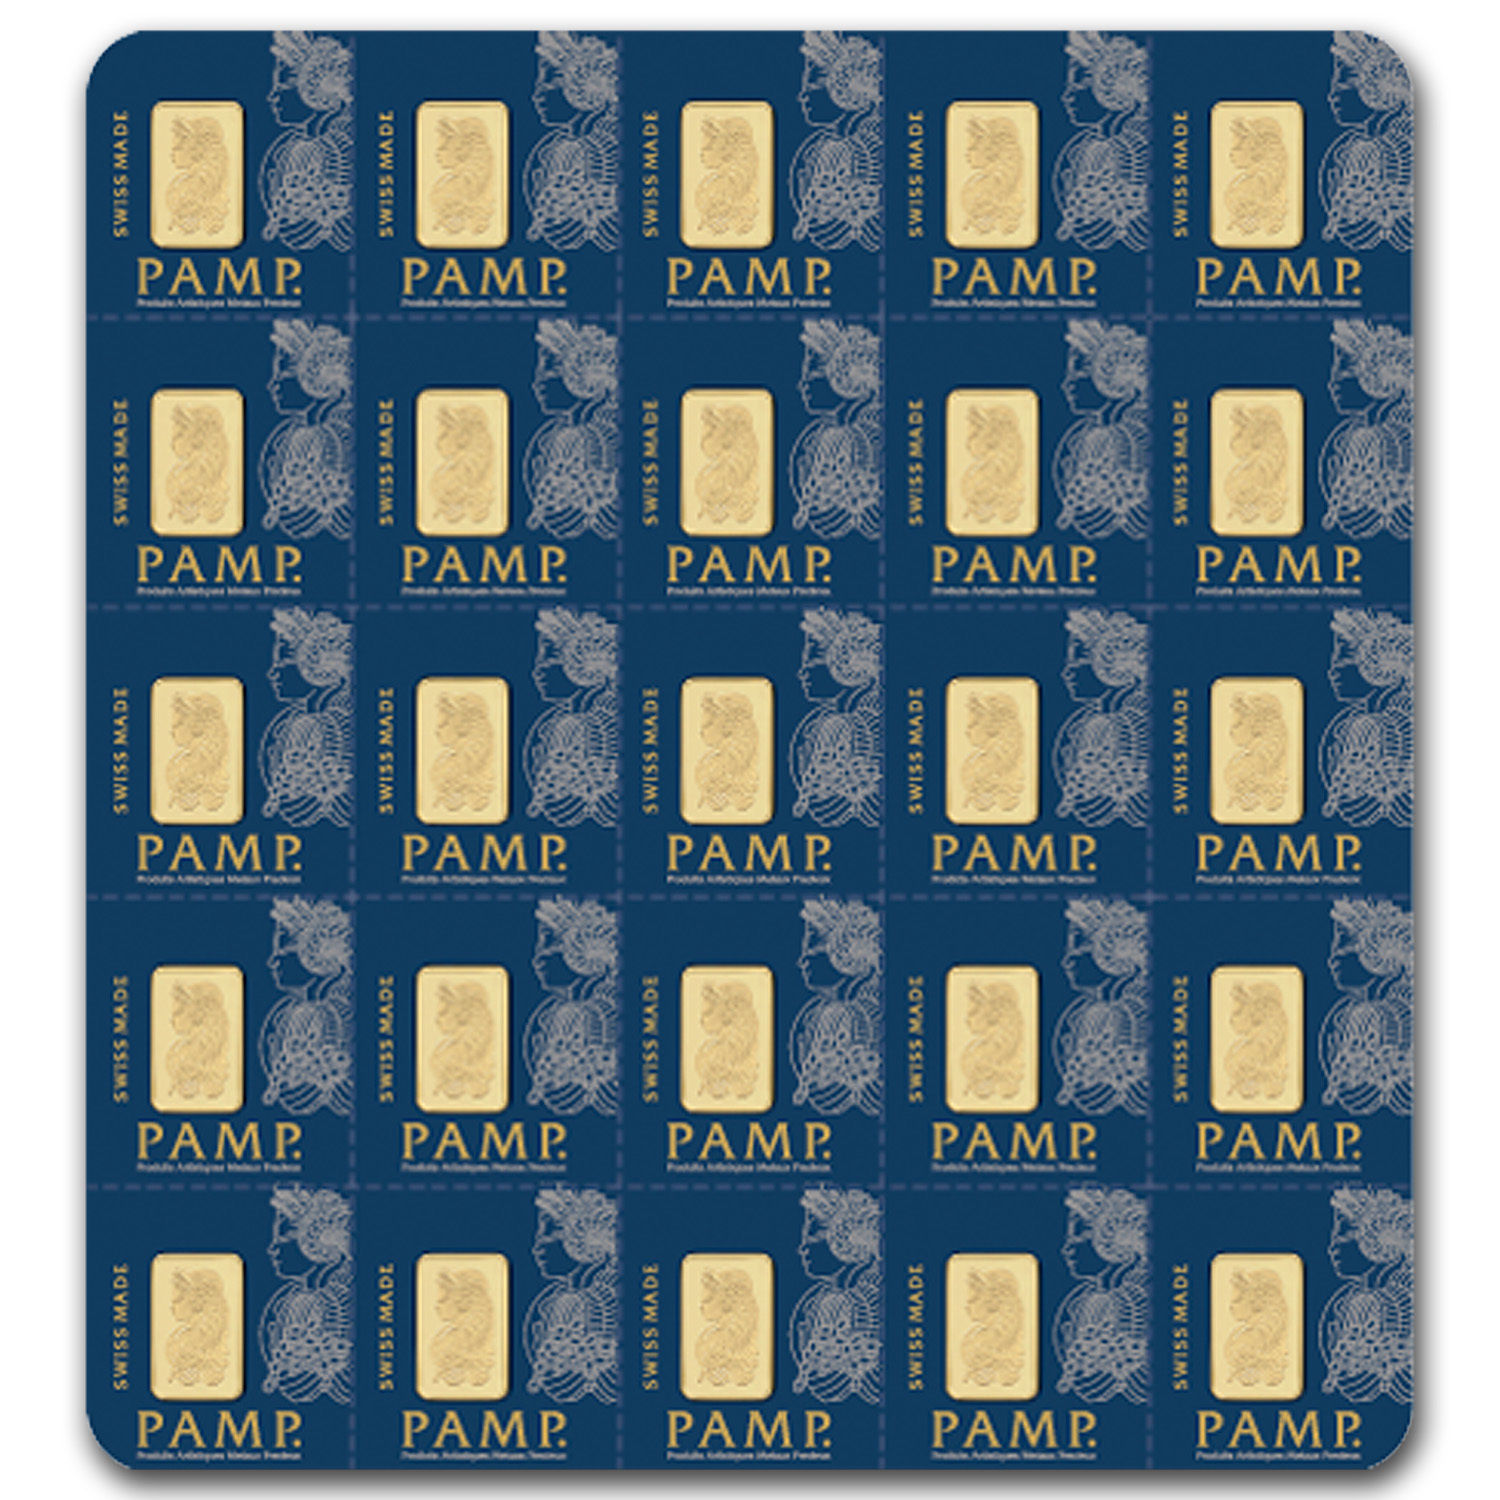 25x1 gram Gold Bar PAMP Suisse Multigram+25 (In Assay) - SKU #80382